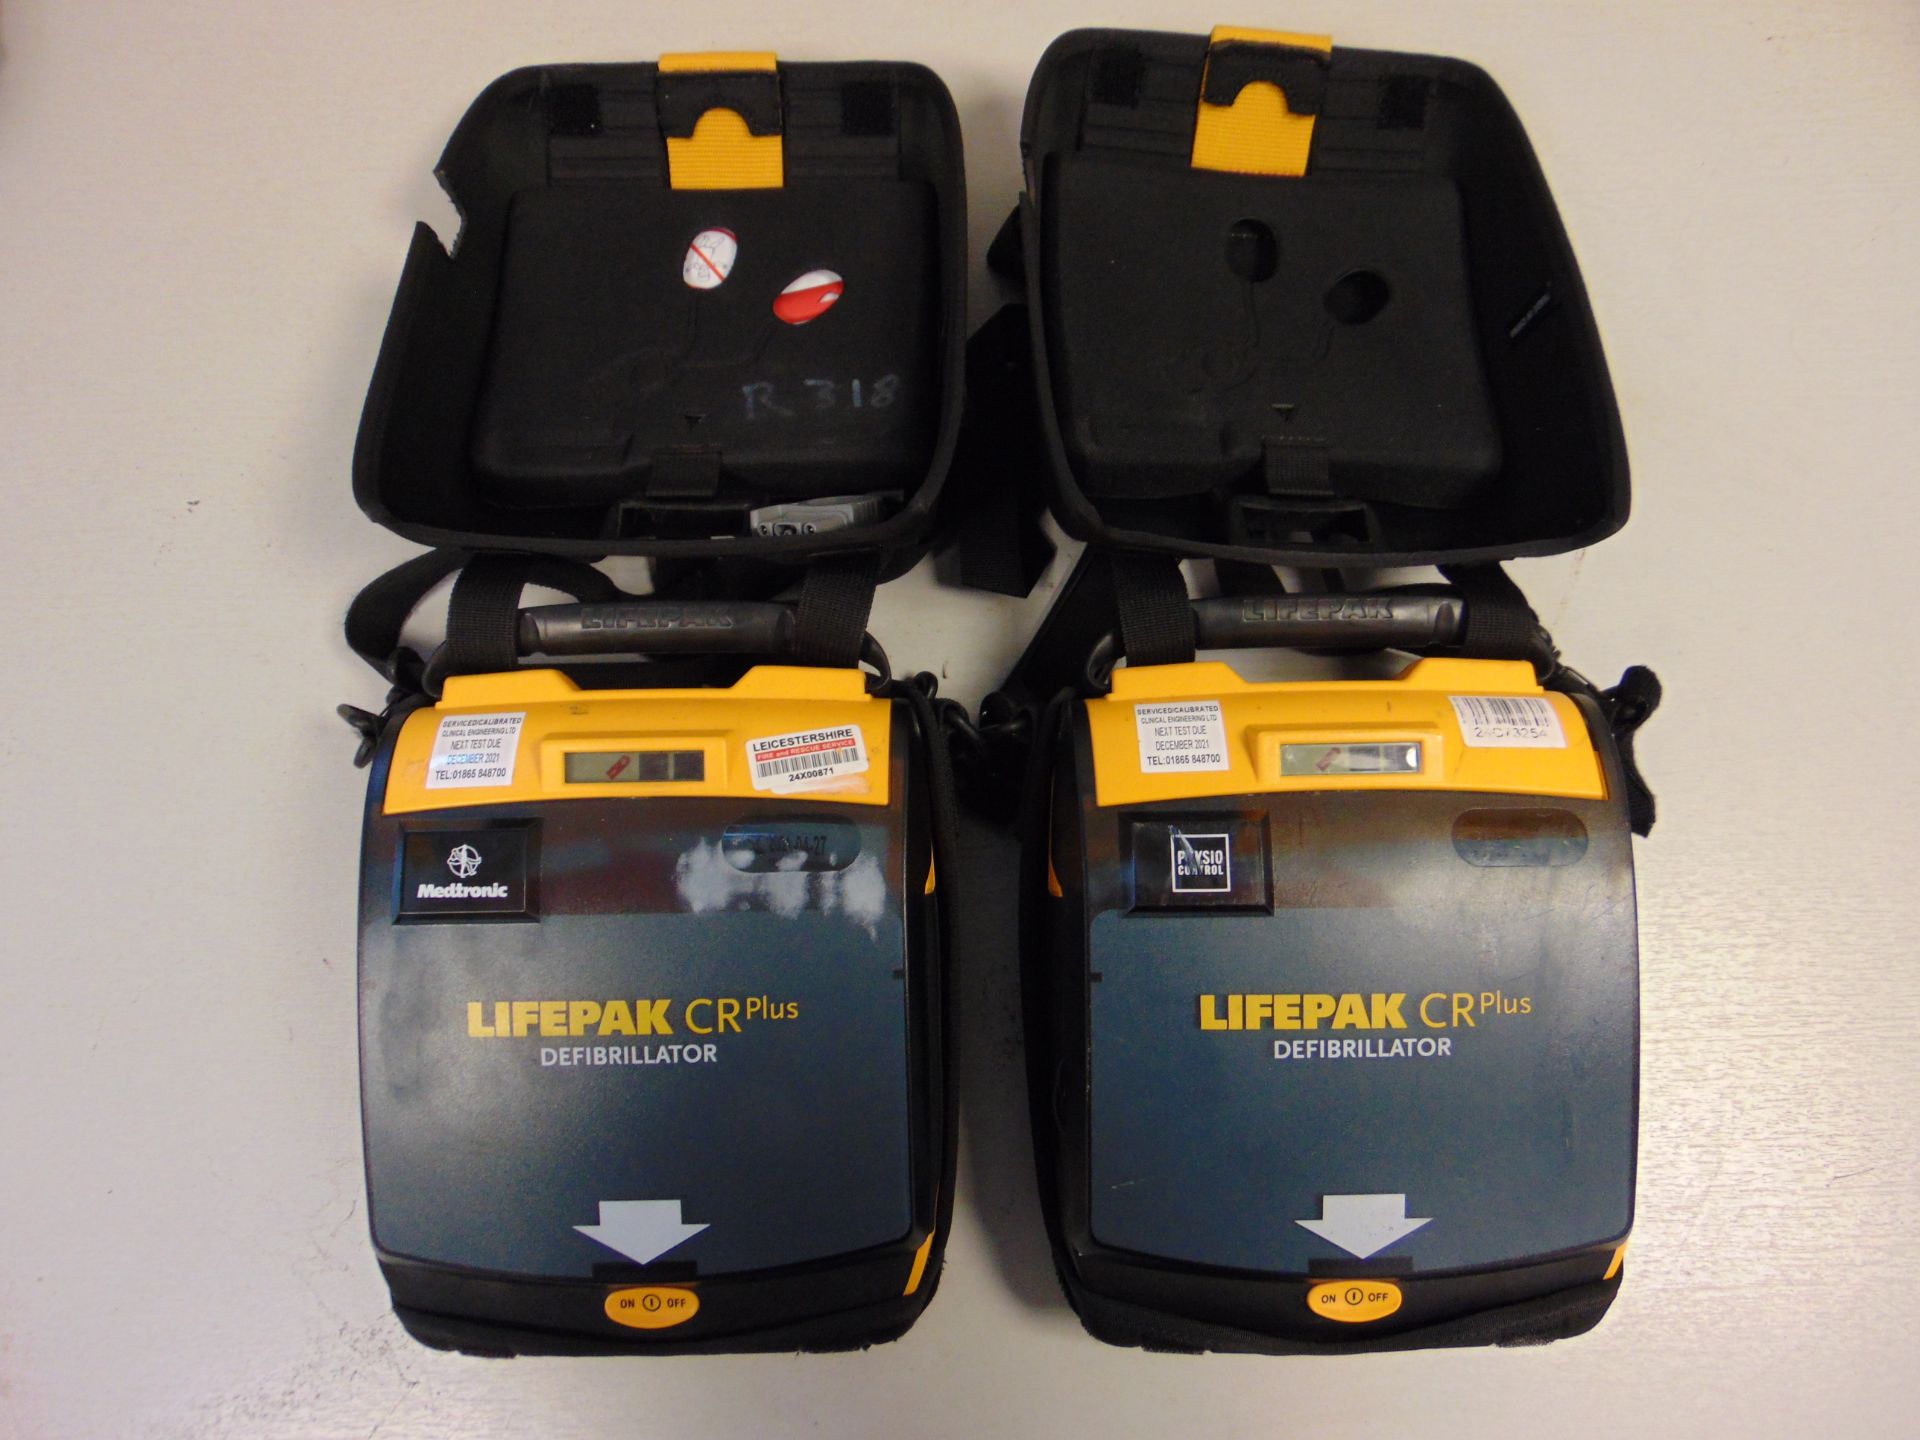 2 x Physio-Control Lifepak CR Plus Defibrillator Units - Fully Automatic - Image 3 of 3